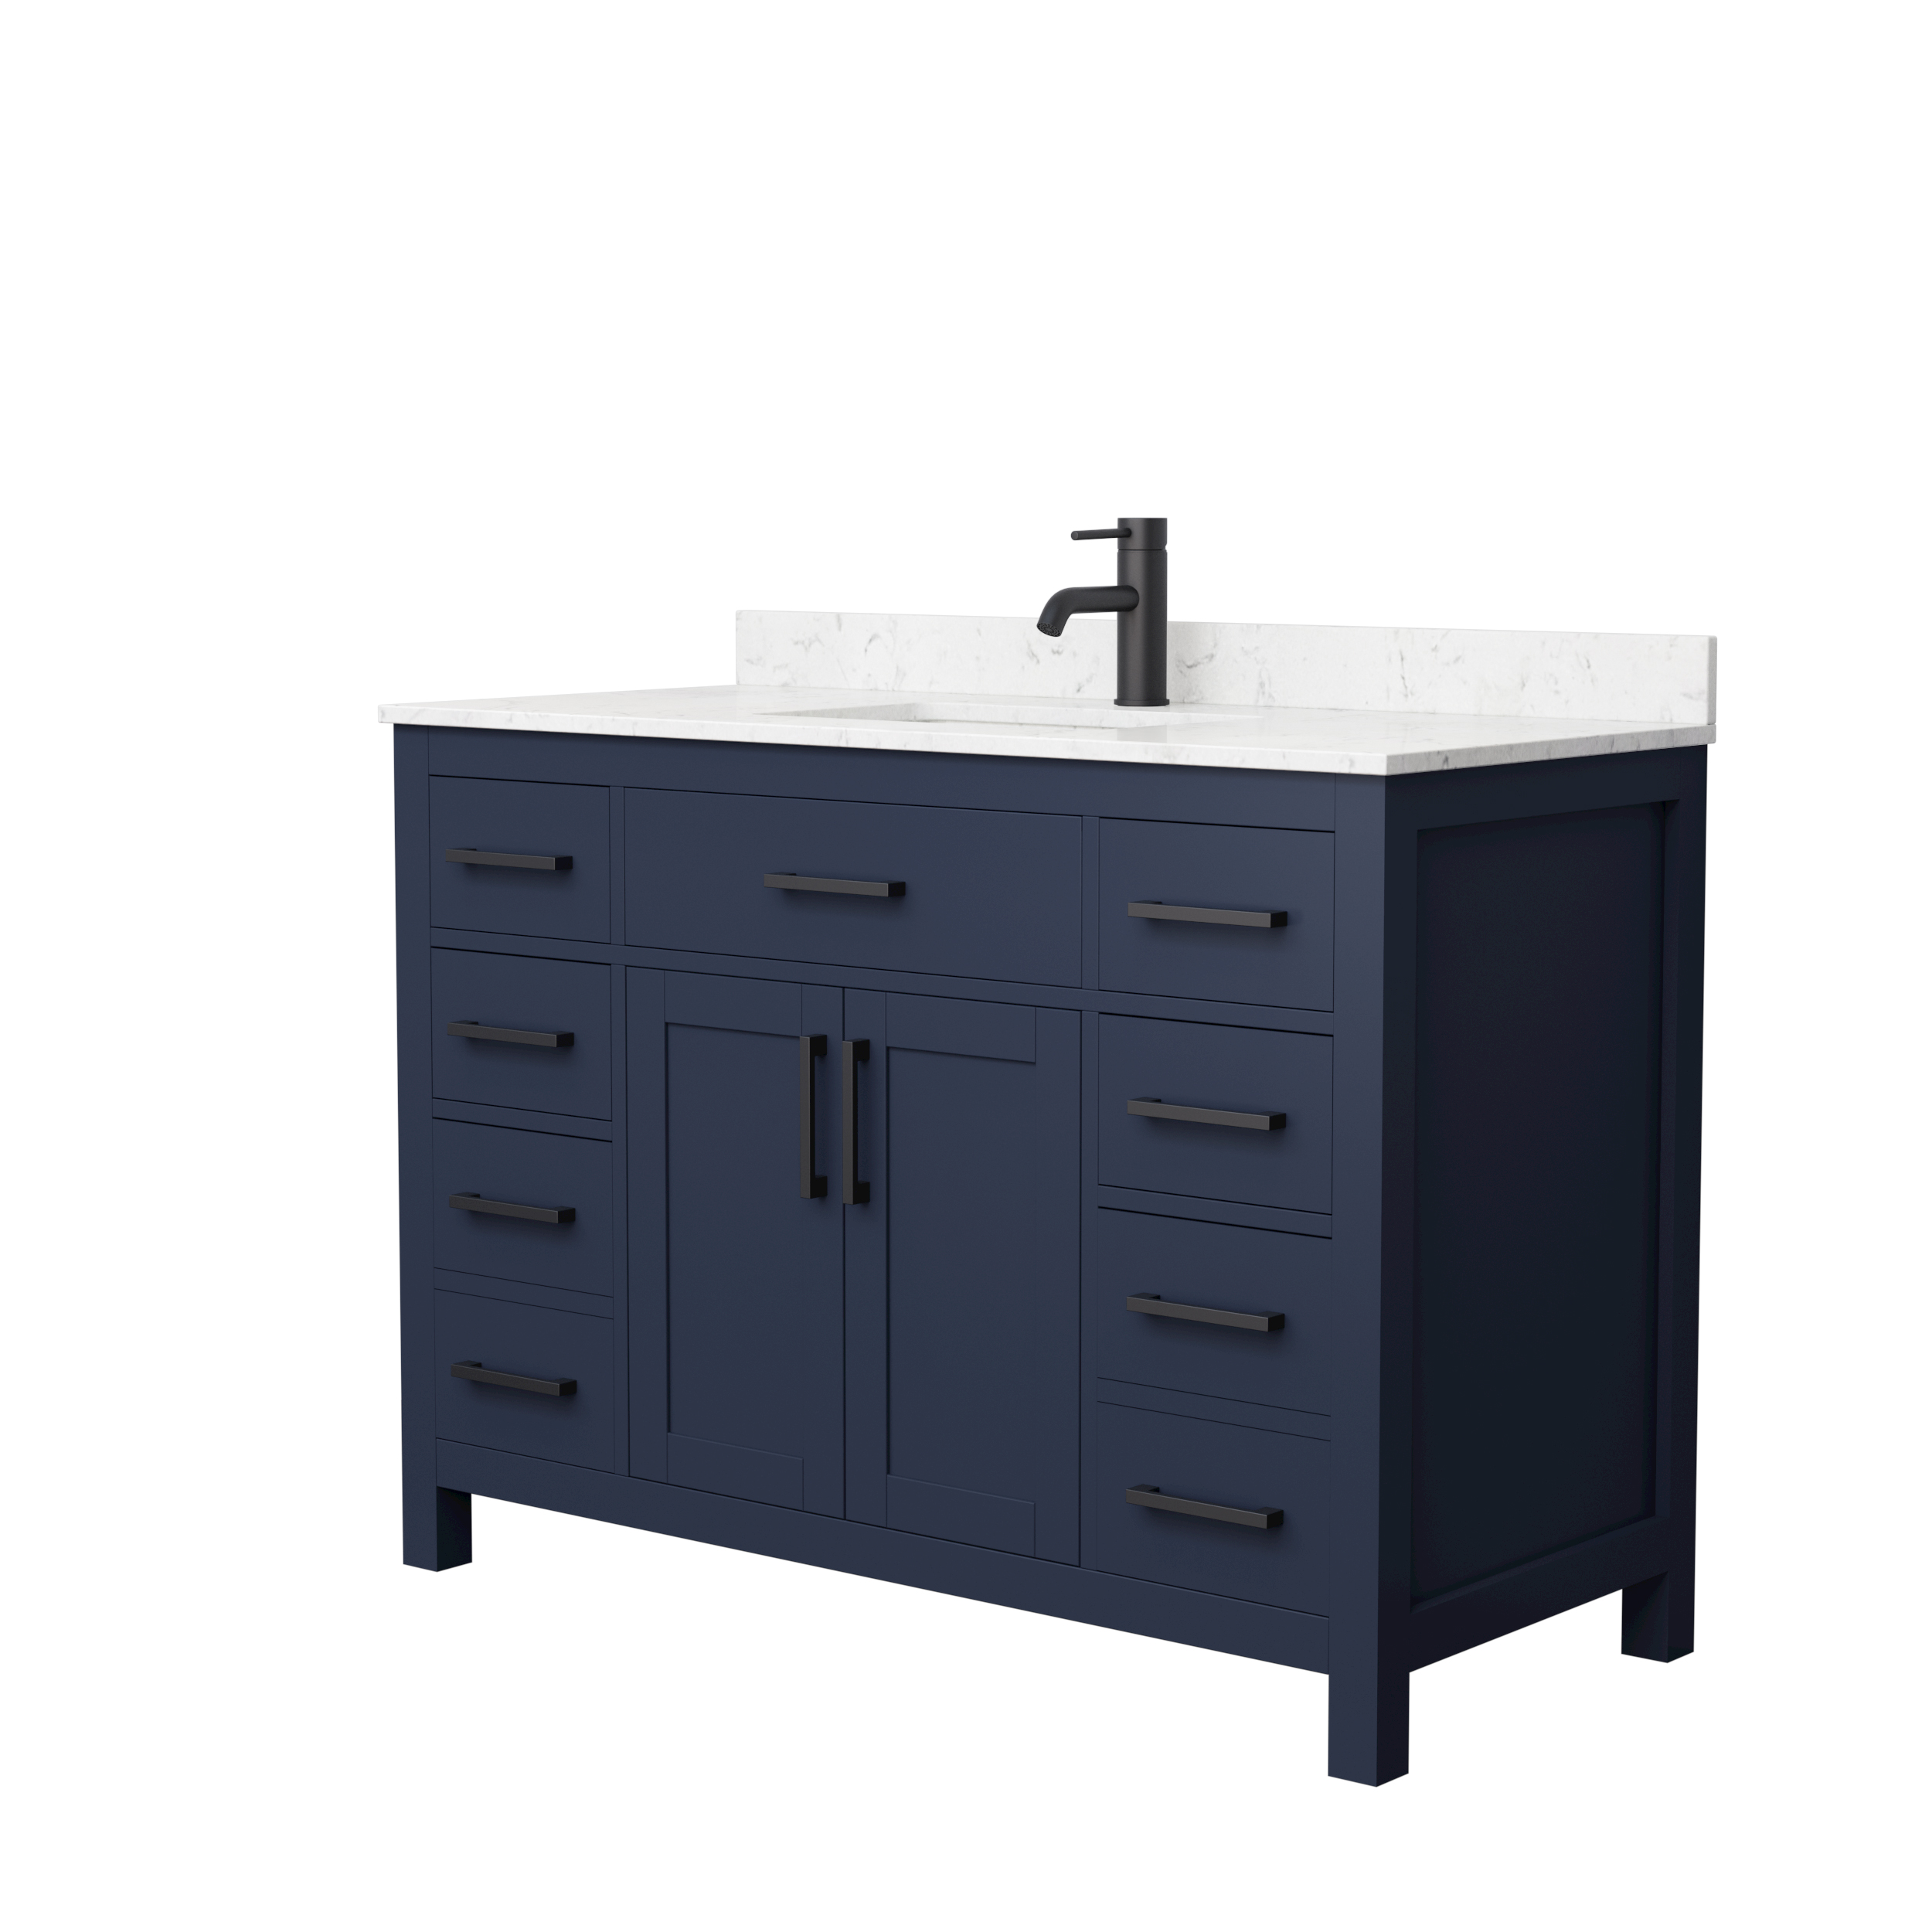 beckett 48" single bathroom vanity by wyndham collection - dark blue